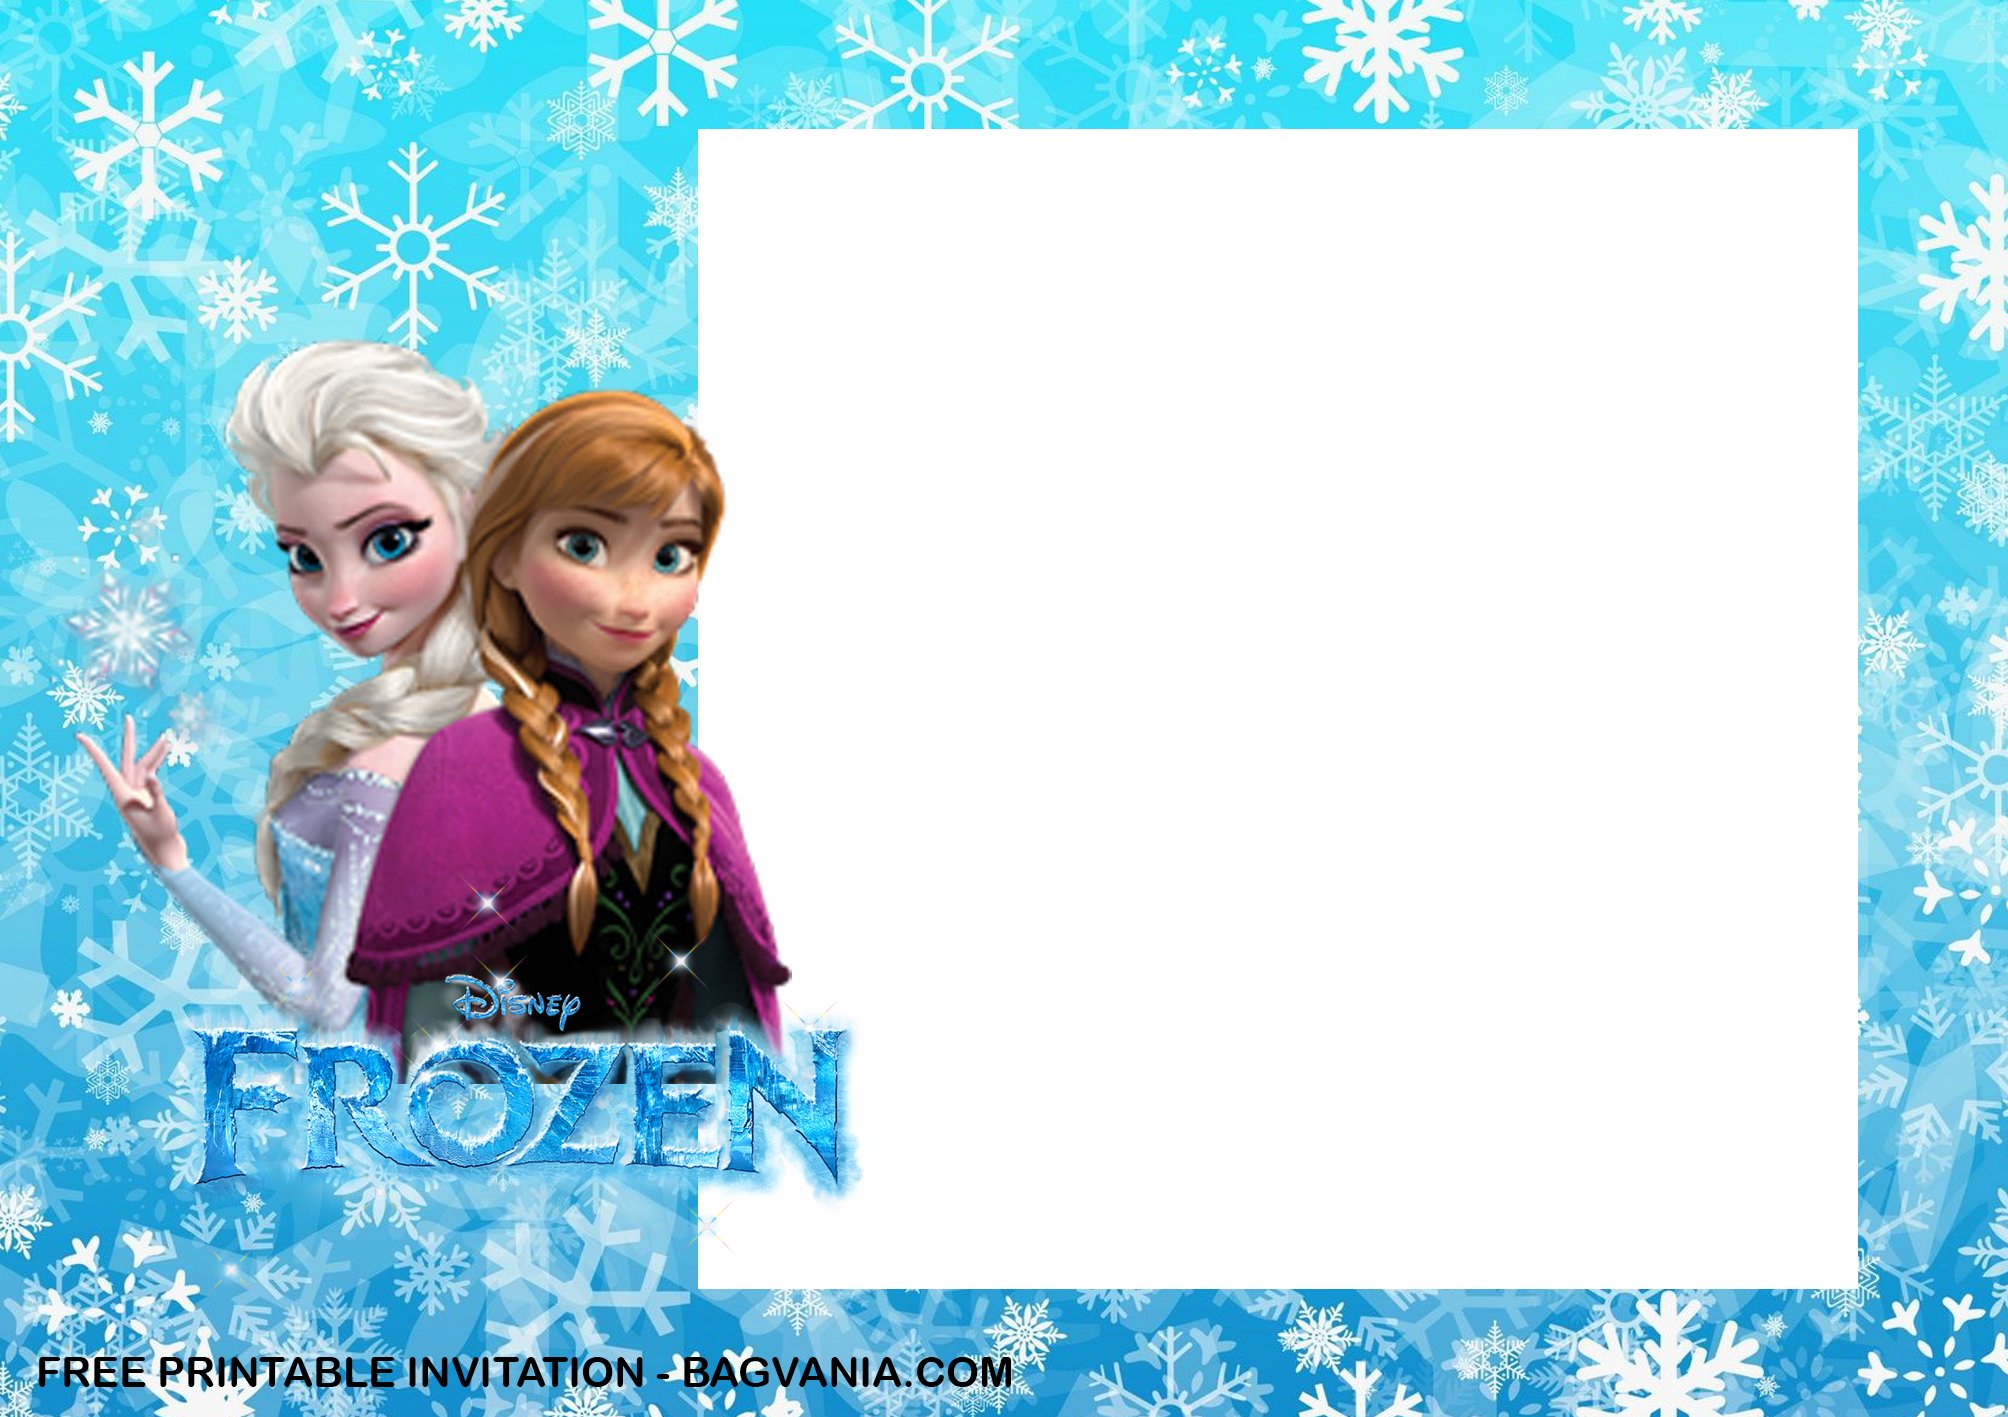 FREE Printable) – Anna and Elsa Frozen Birthday Invitation Regarding Frozen Birthday Card Template